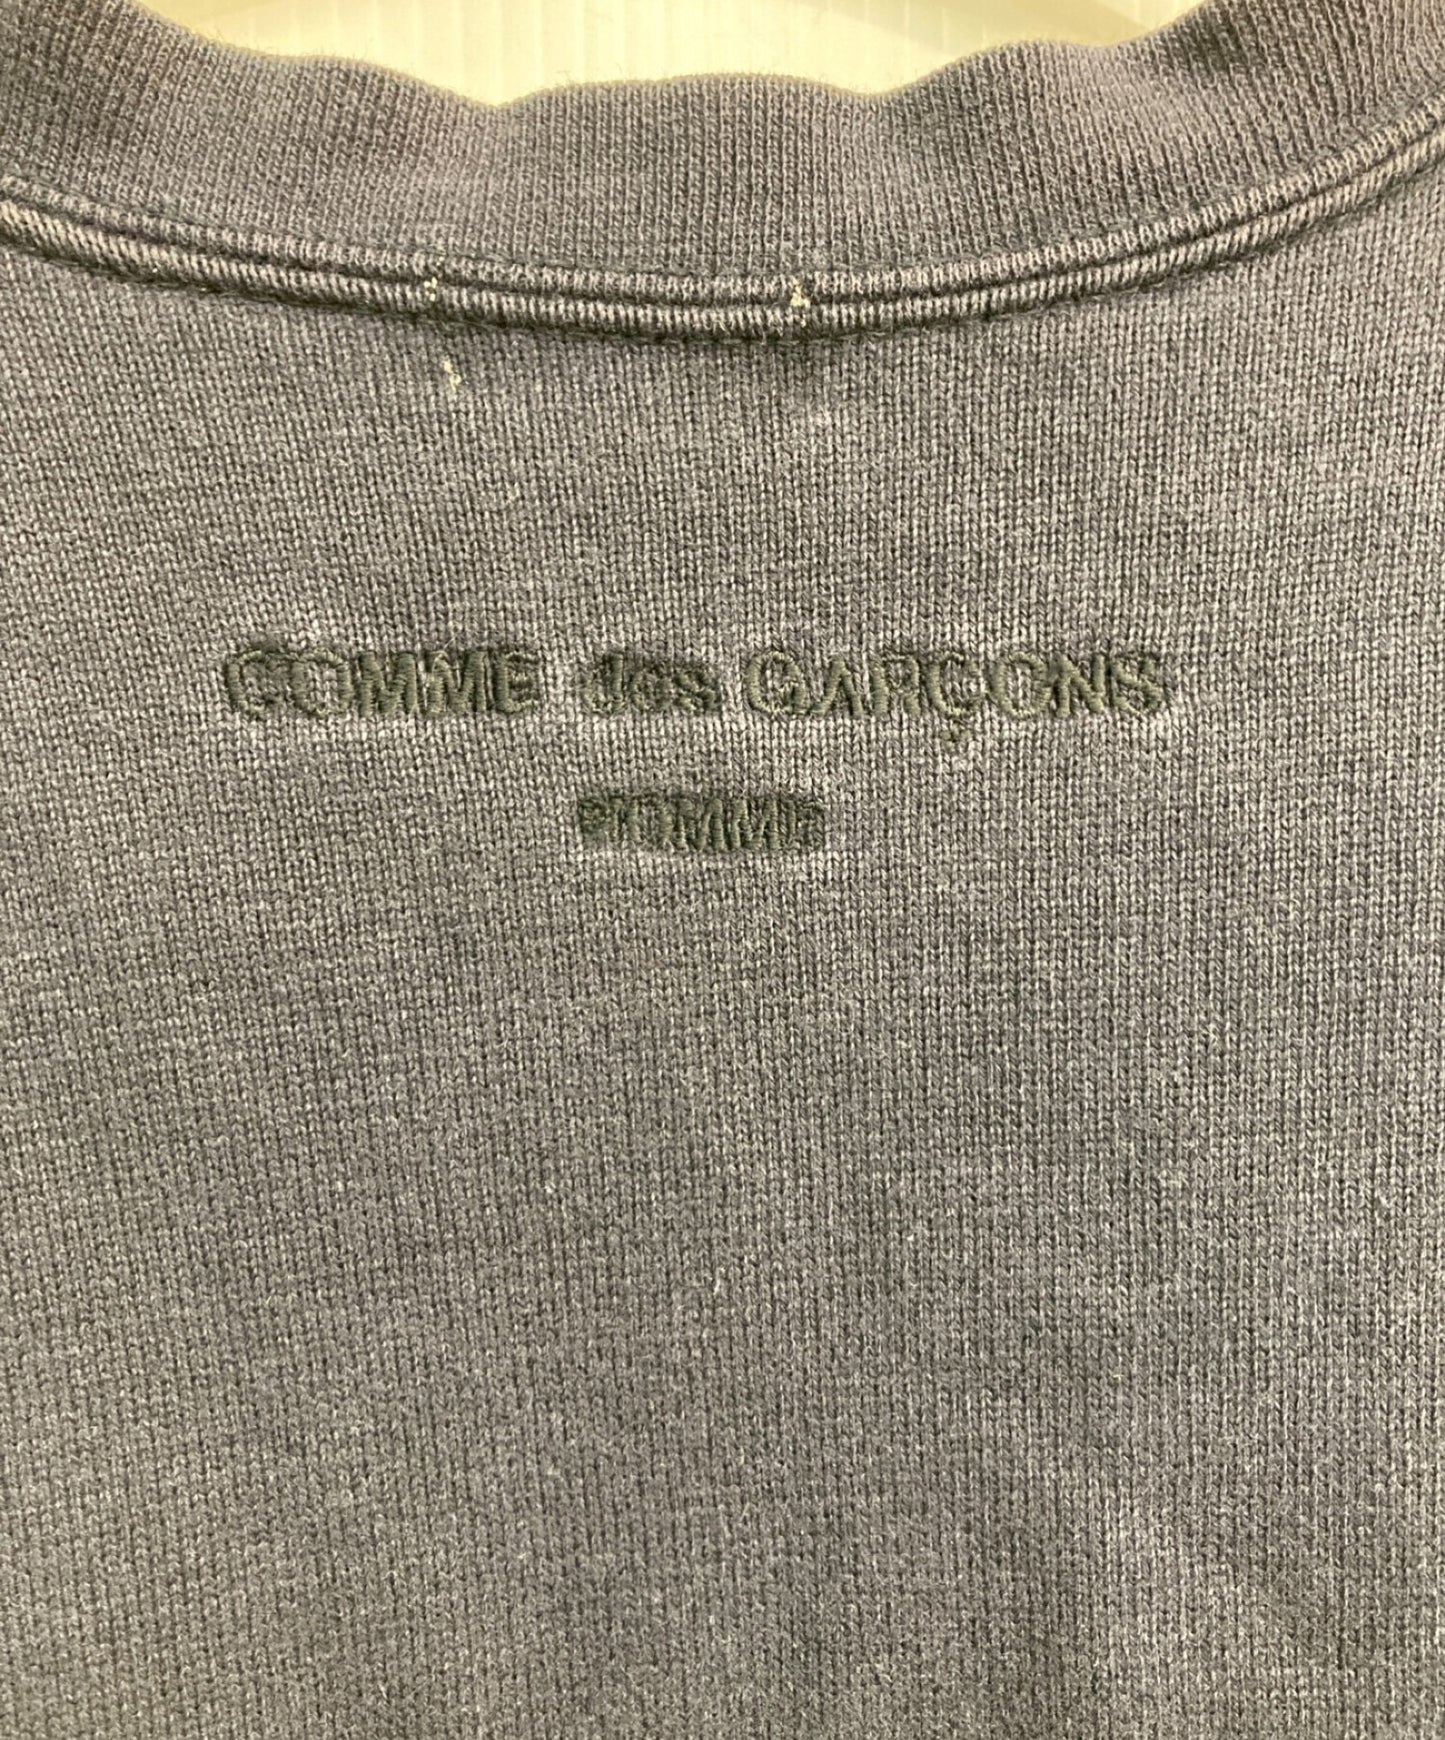 Comme des Garcons Homme 80s-90s Back Embroidery Logo Crewneck Sweatshirt Tanaka OM